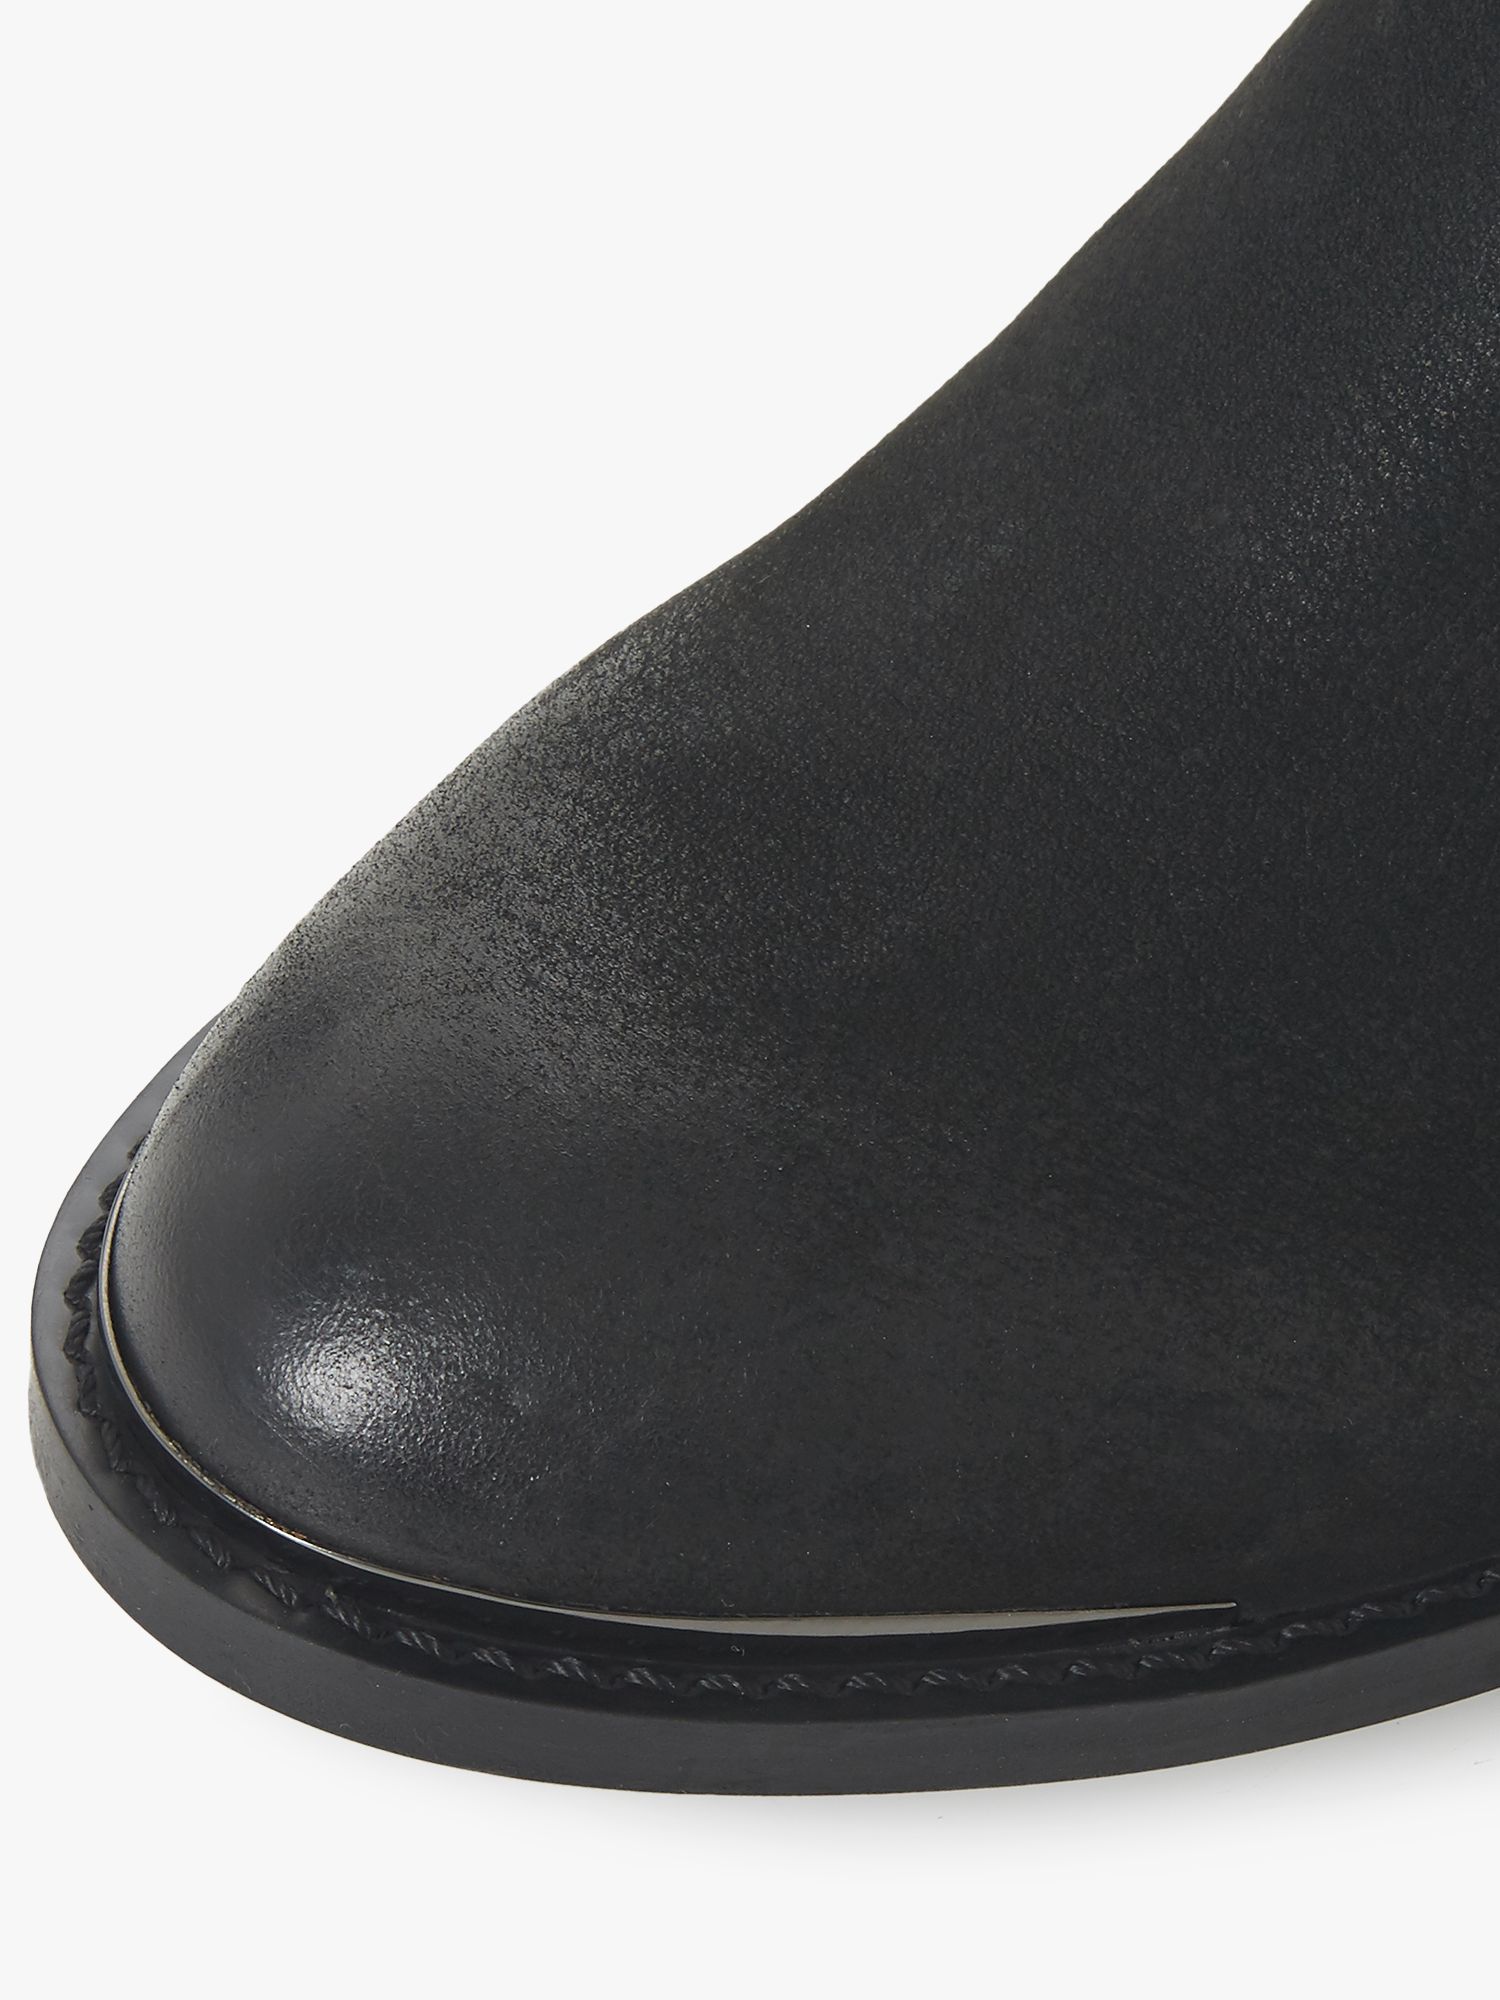 Steve Madden Rova Knee High Boots, Black Leather